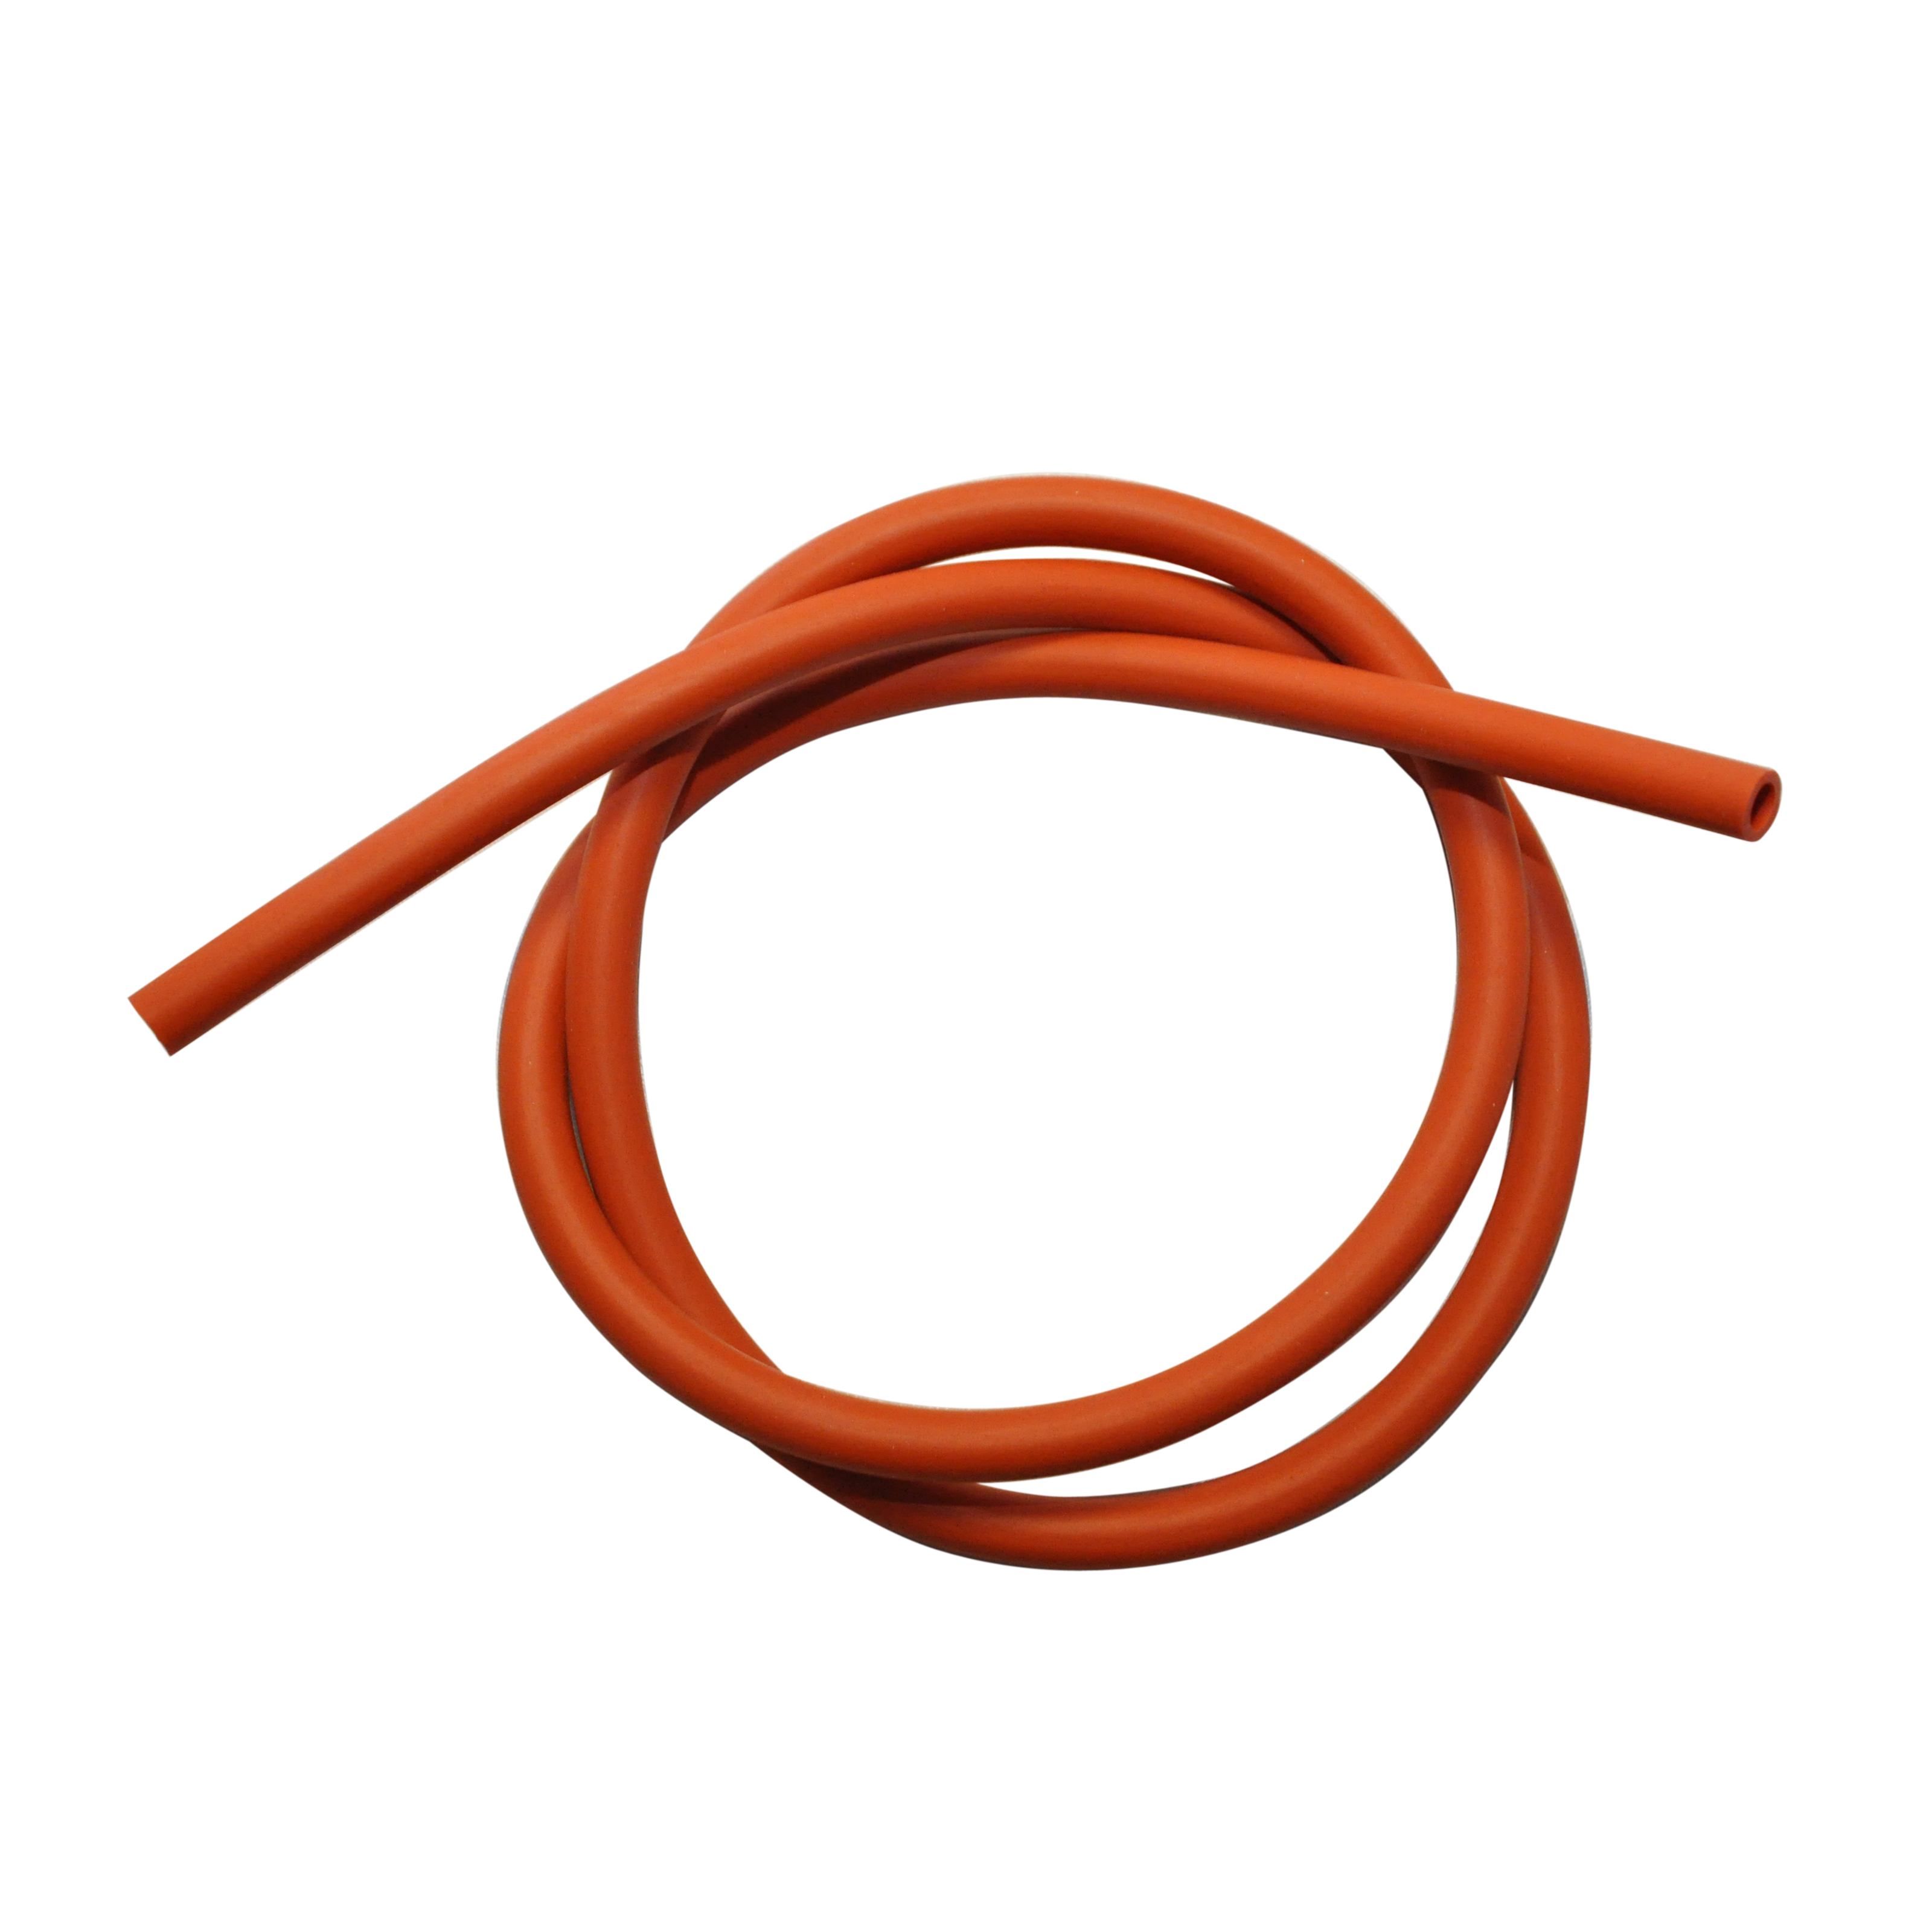 Rubber hose 6 x 2 mm, orange